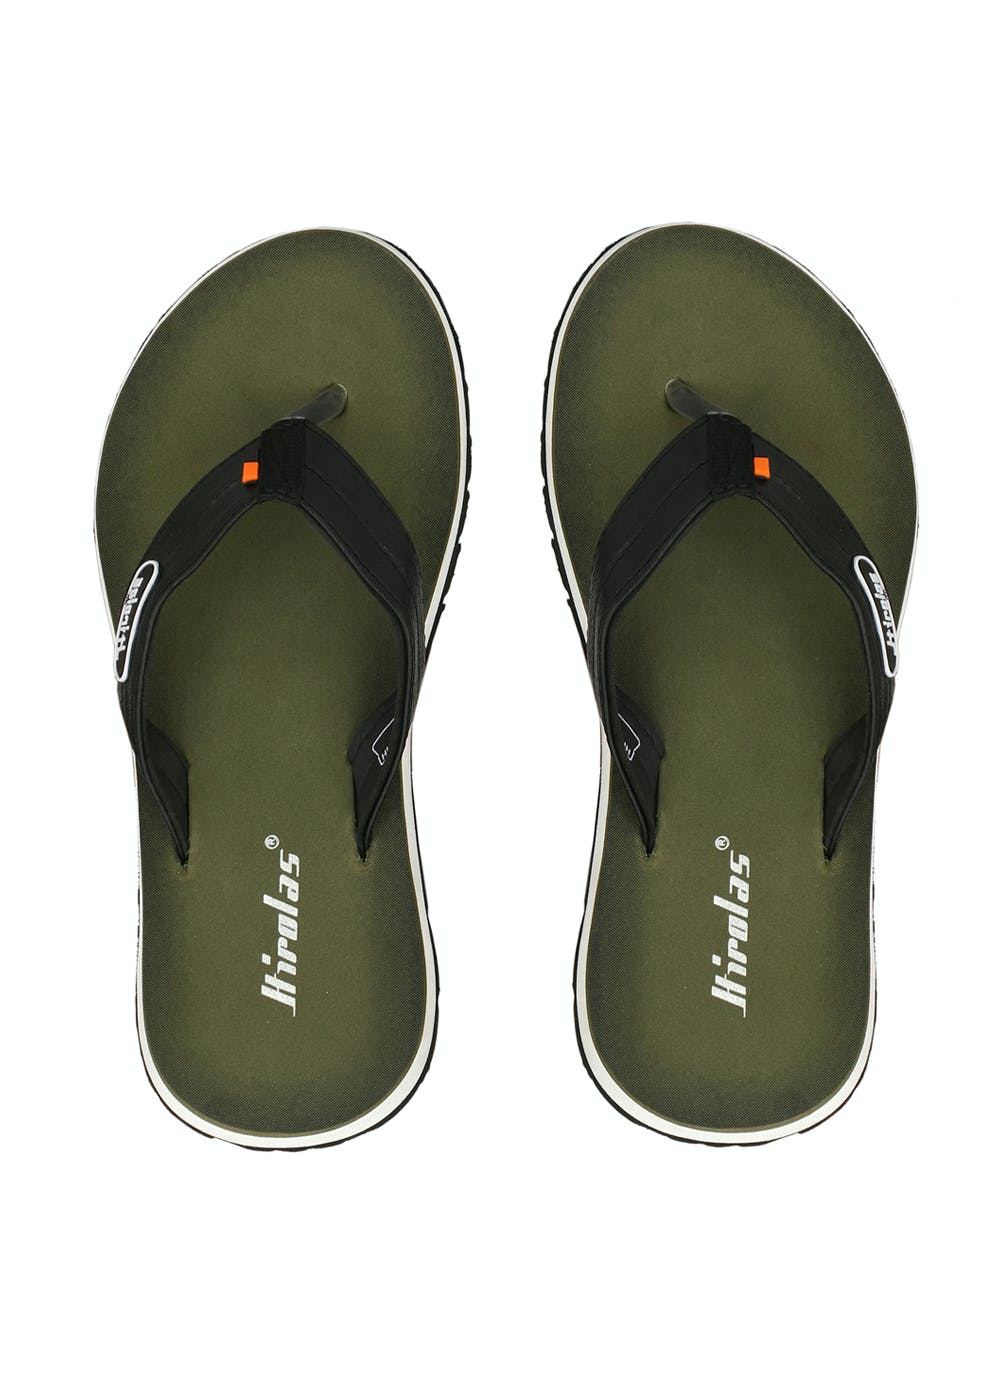 hirolas slippers